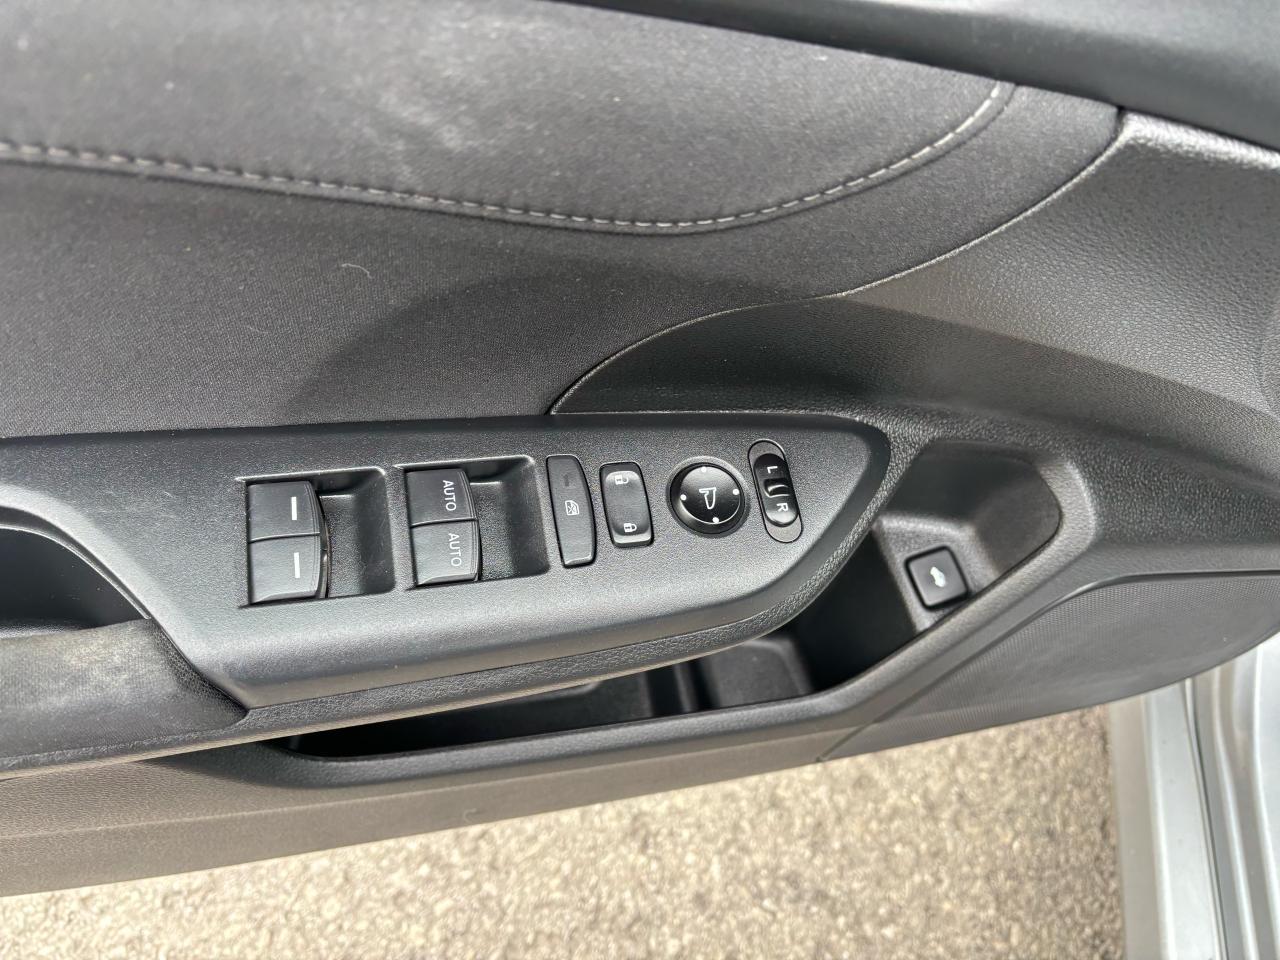 2017 Honda Civic EX, Alloys, Sunroof, Lane Departure Warning - Photo #16